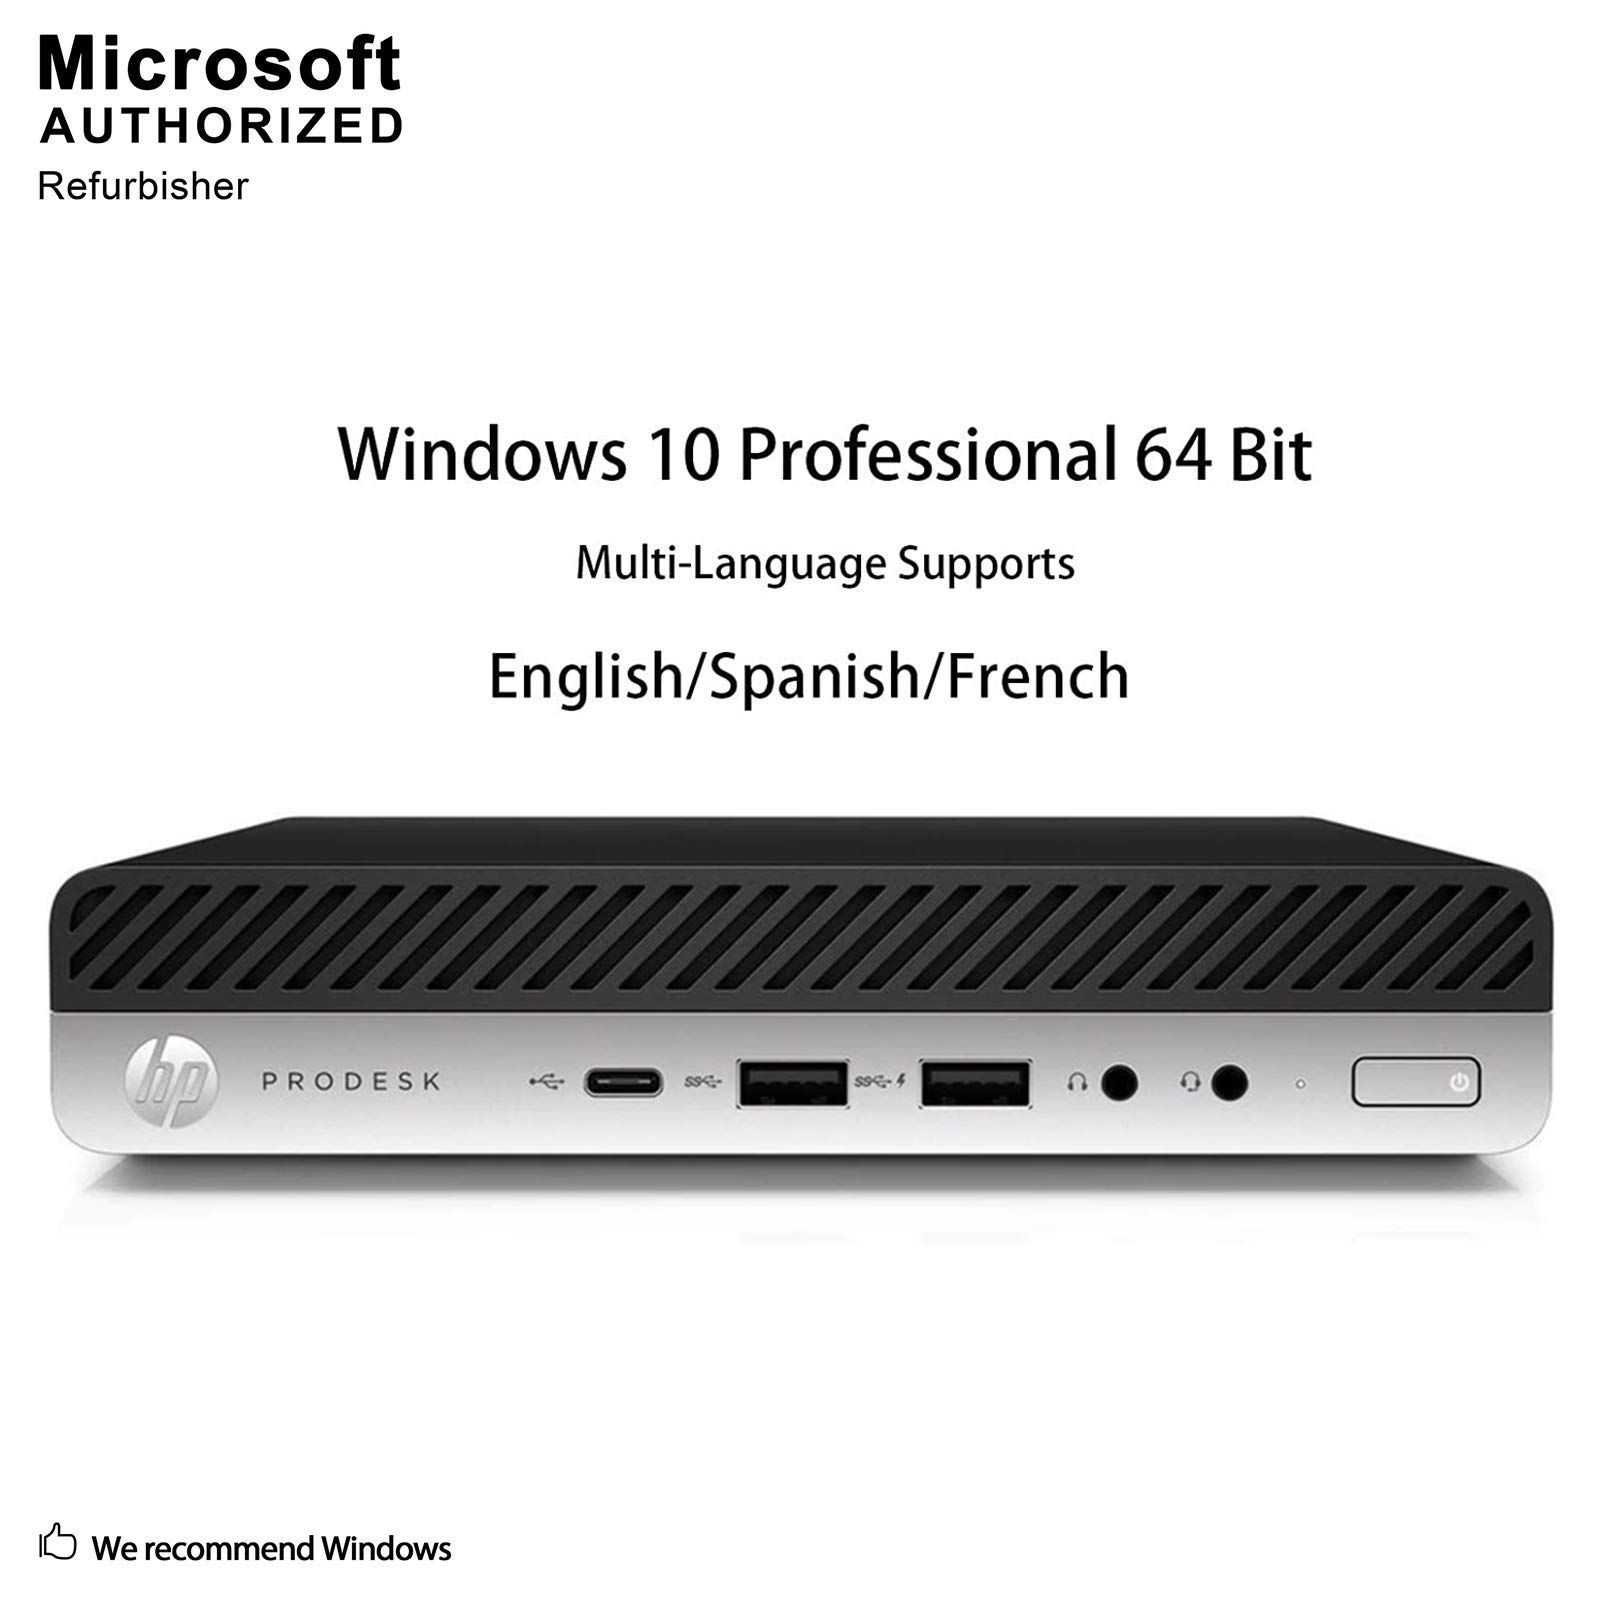 HP ProDesk 600 G3 Desktop Mini High Performance Business PC, Intel Quad Core i5-7500T 2.7GHz, 16G DDR4, 1T SSD, WiFi, BT, DP, Windows 10 Pro 64 Language Supports English/Spanish/French(Renewed)